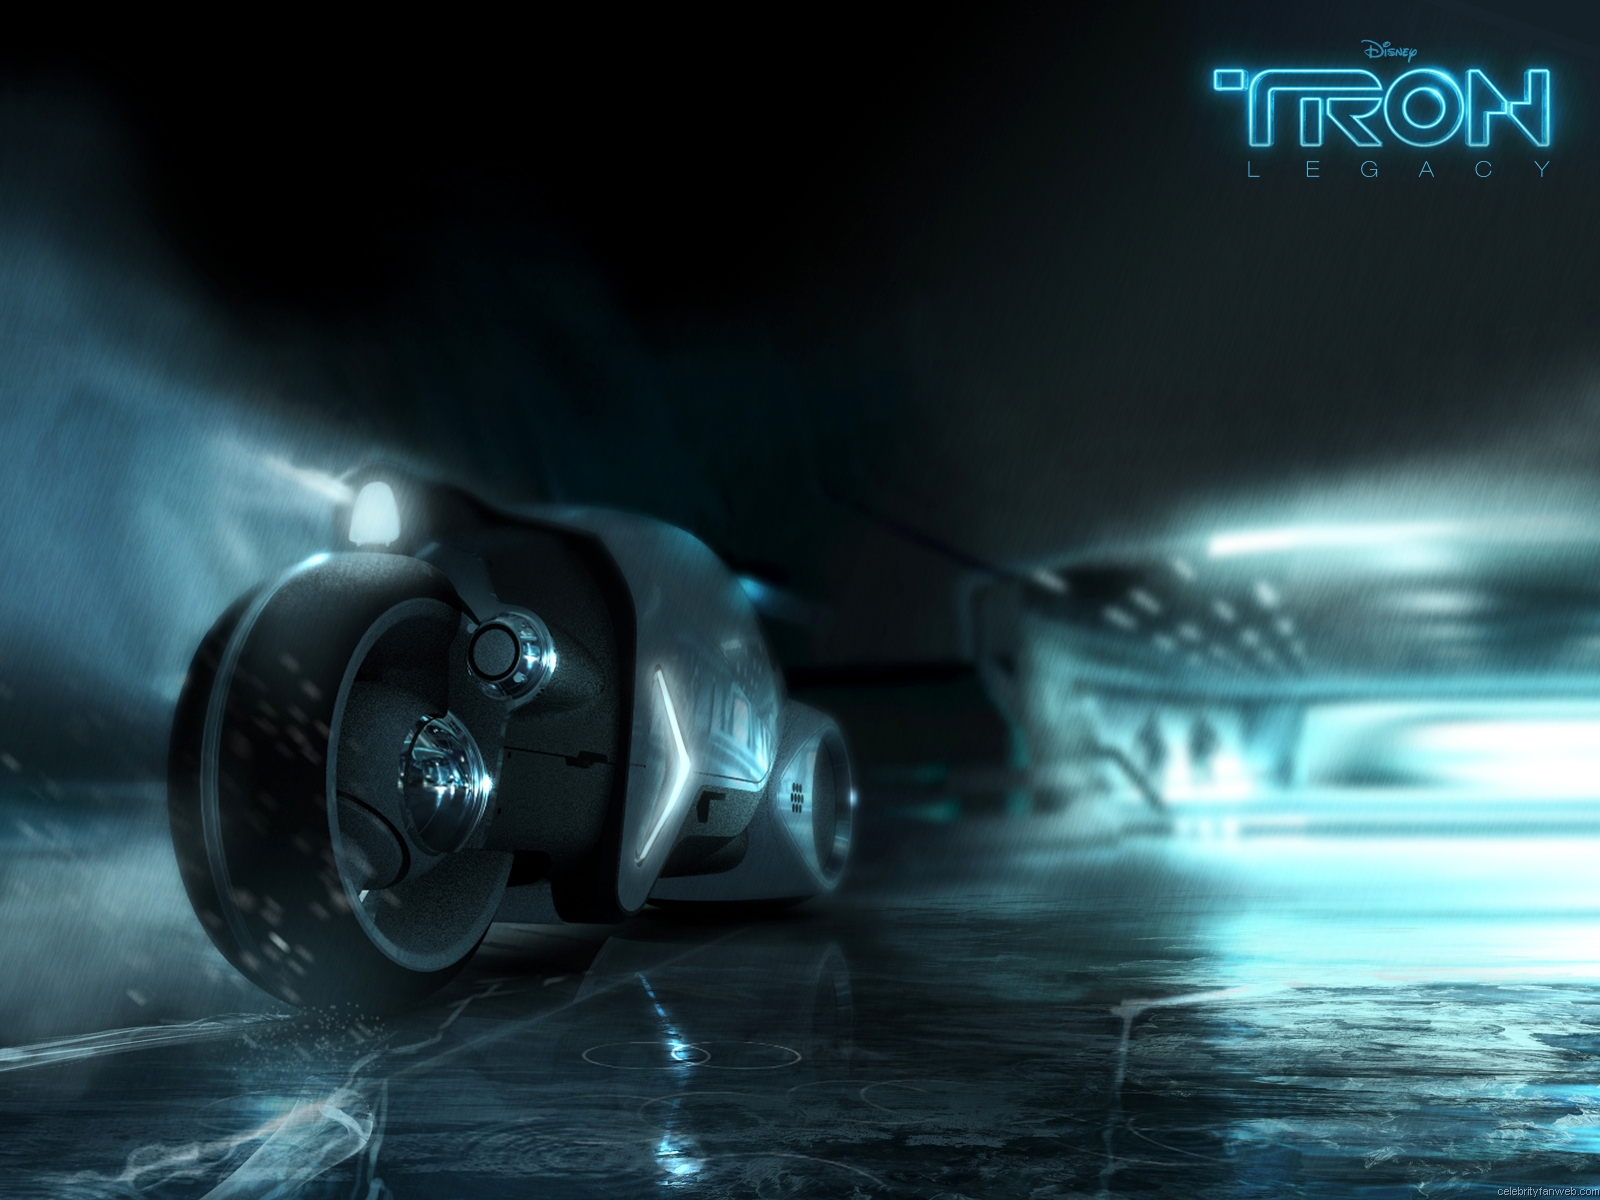 tron legacy wallpaper,light,headlamp,automotive lighting,space,vehicle